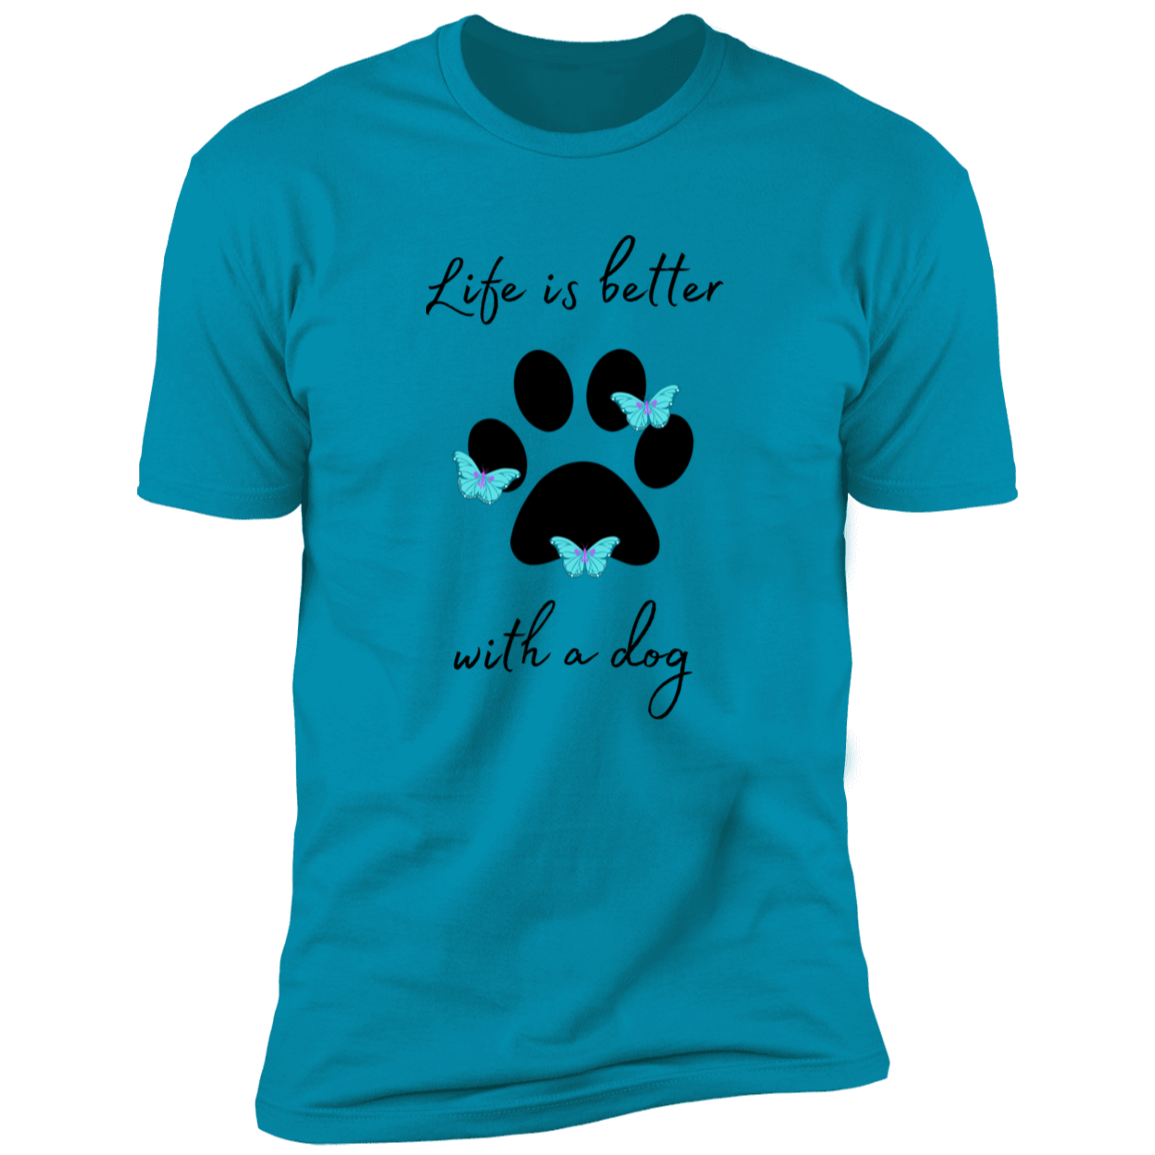 Kitt-Tea T-Shirt, kitty tea shirt, Cat Shirt for humans, funny cat shirt, in turquoise